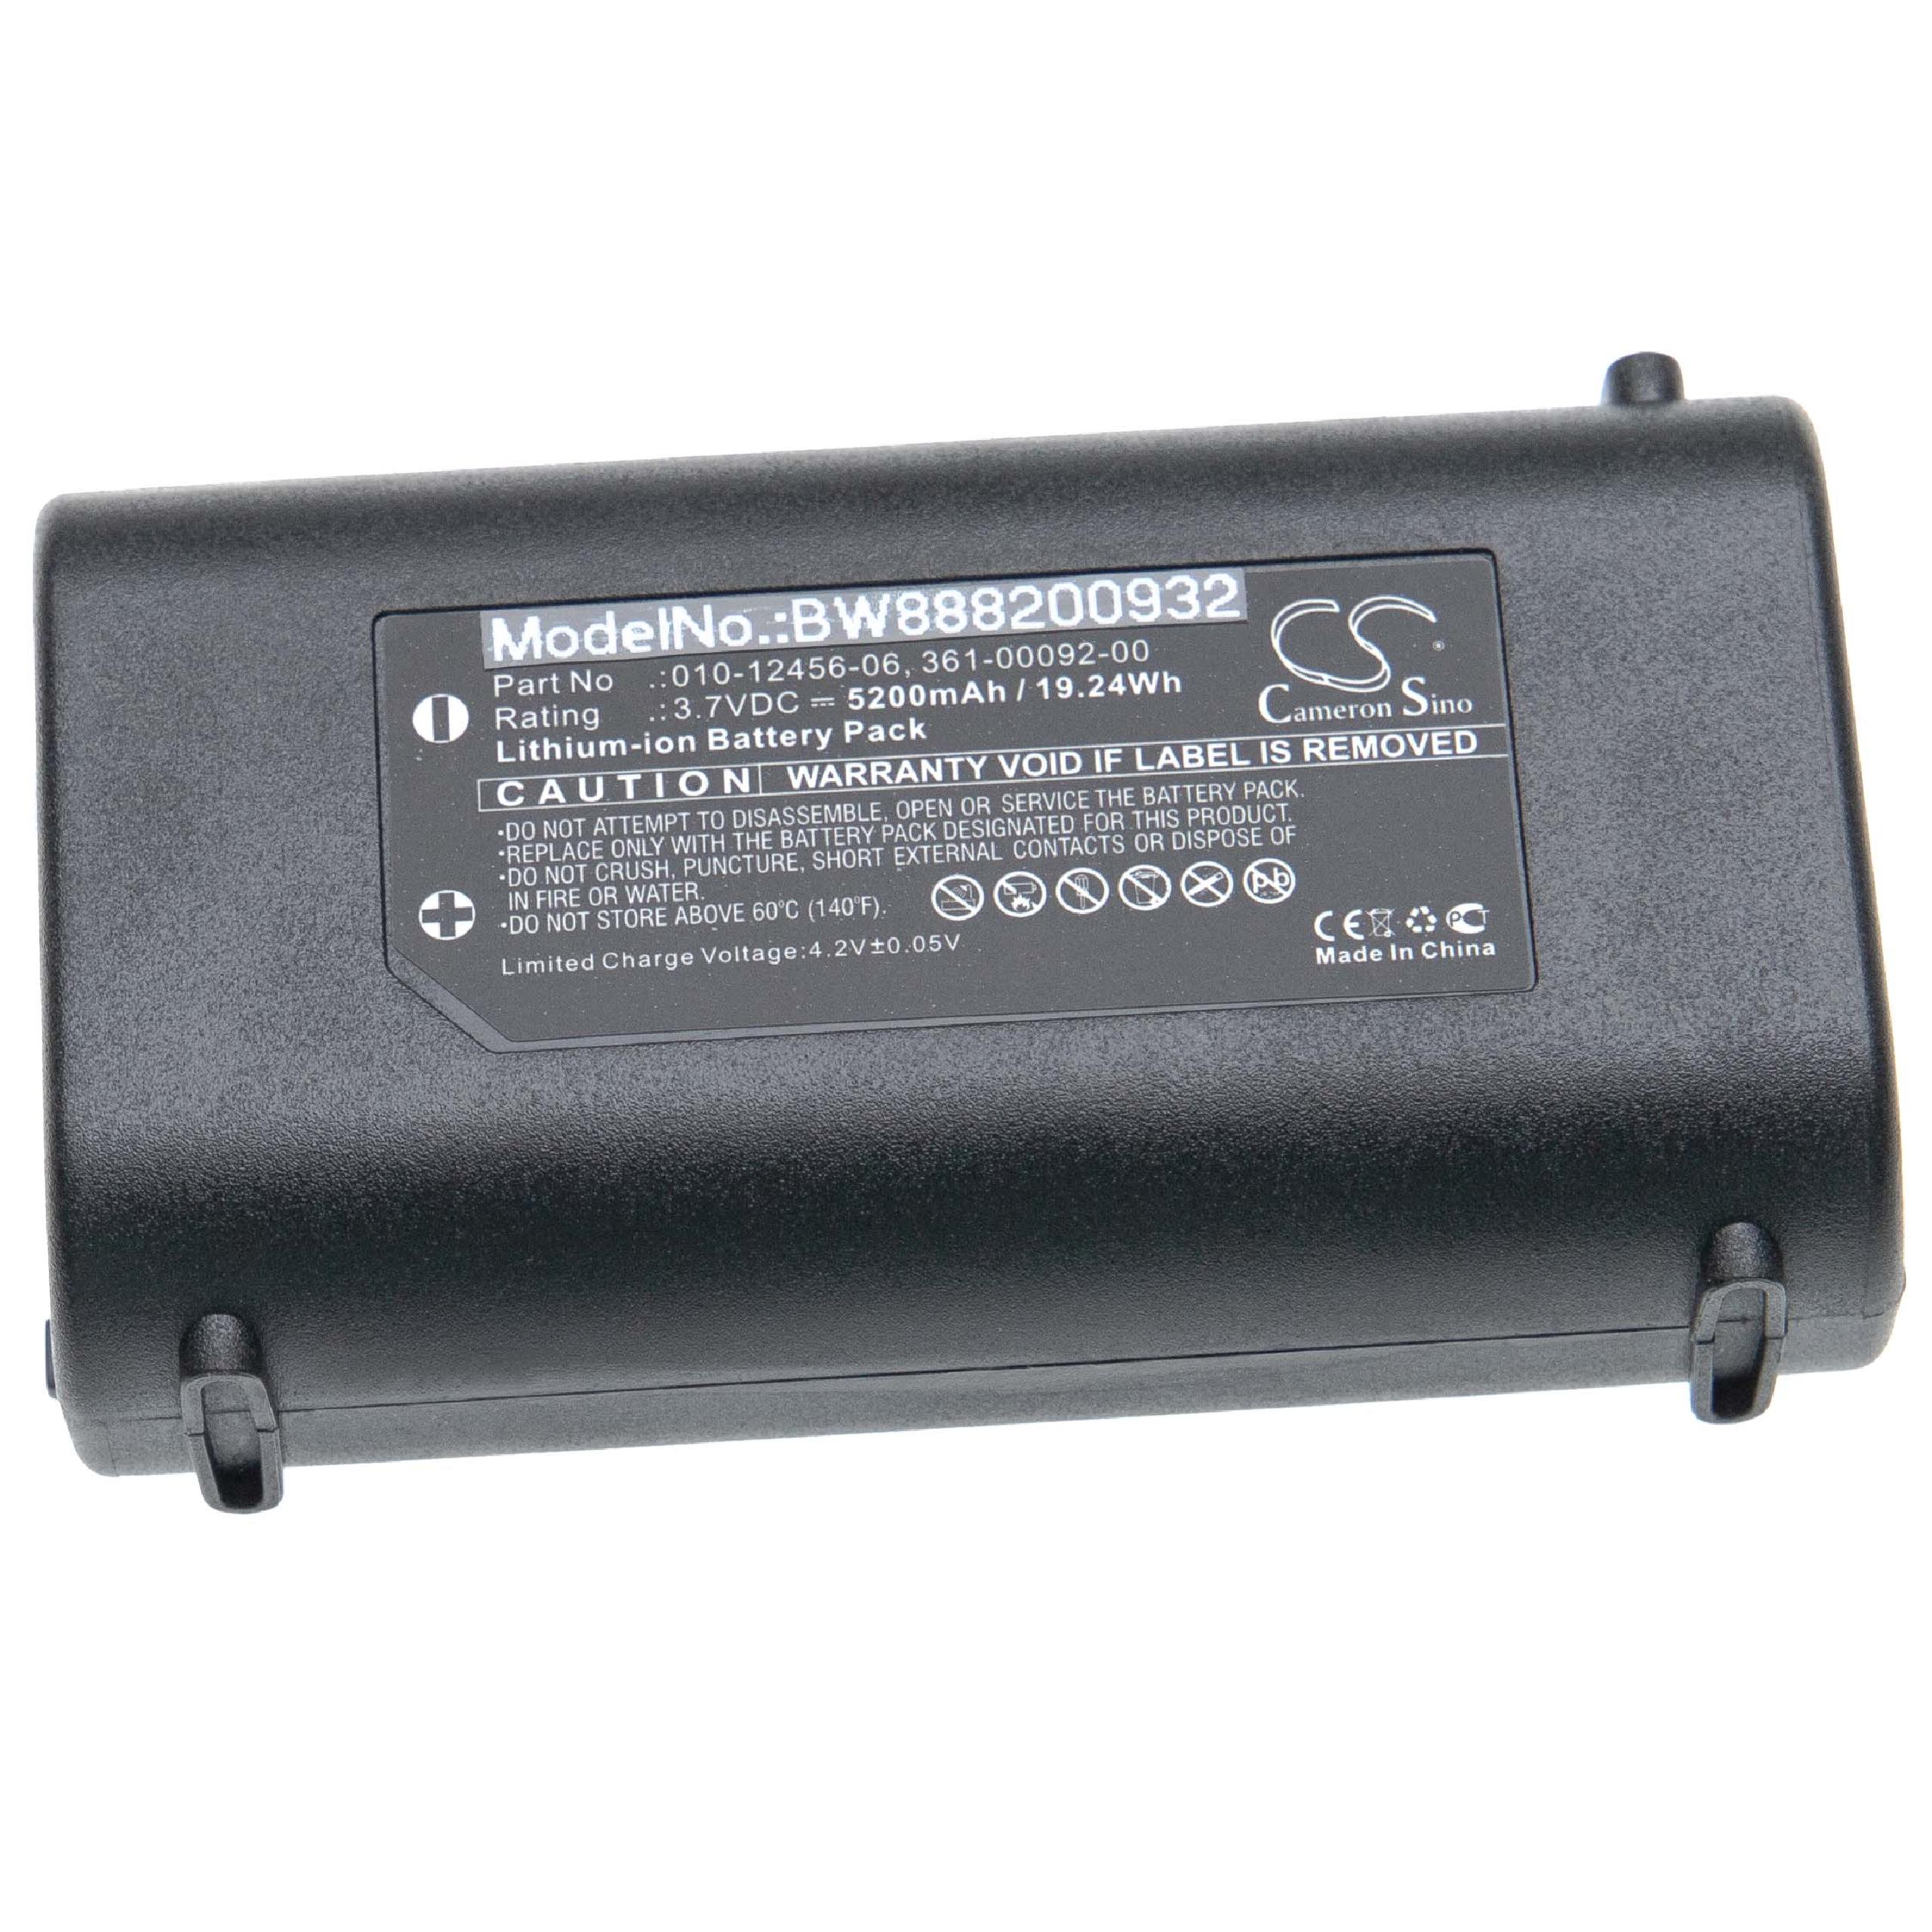 GPS Tracker Battery Replacement for Garmin 010-12456-06, 361-00092-00 - 5200mAh 3.7V Li-Ion